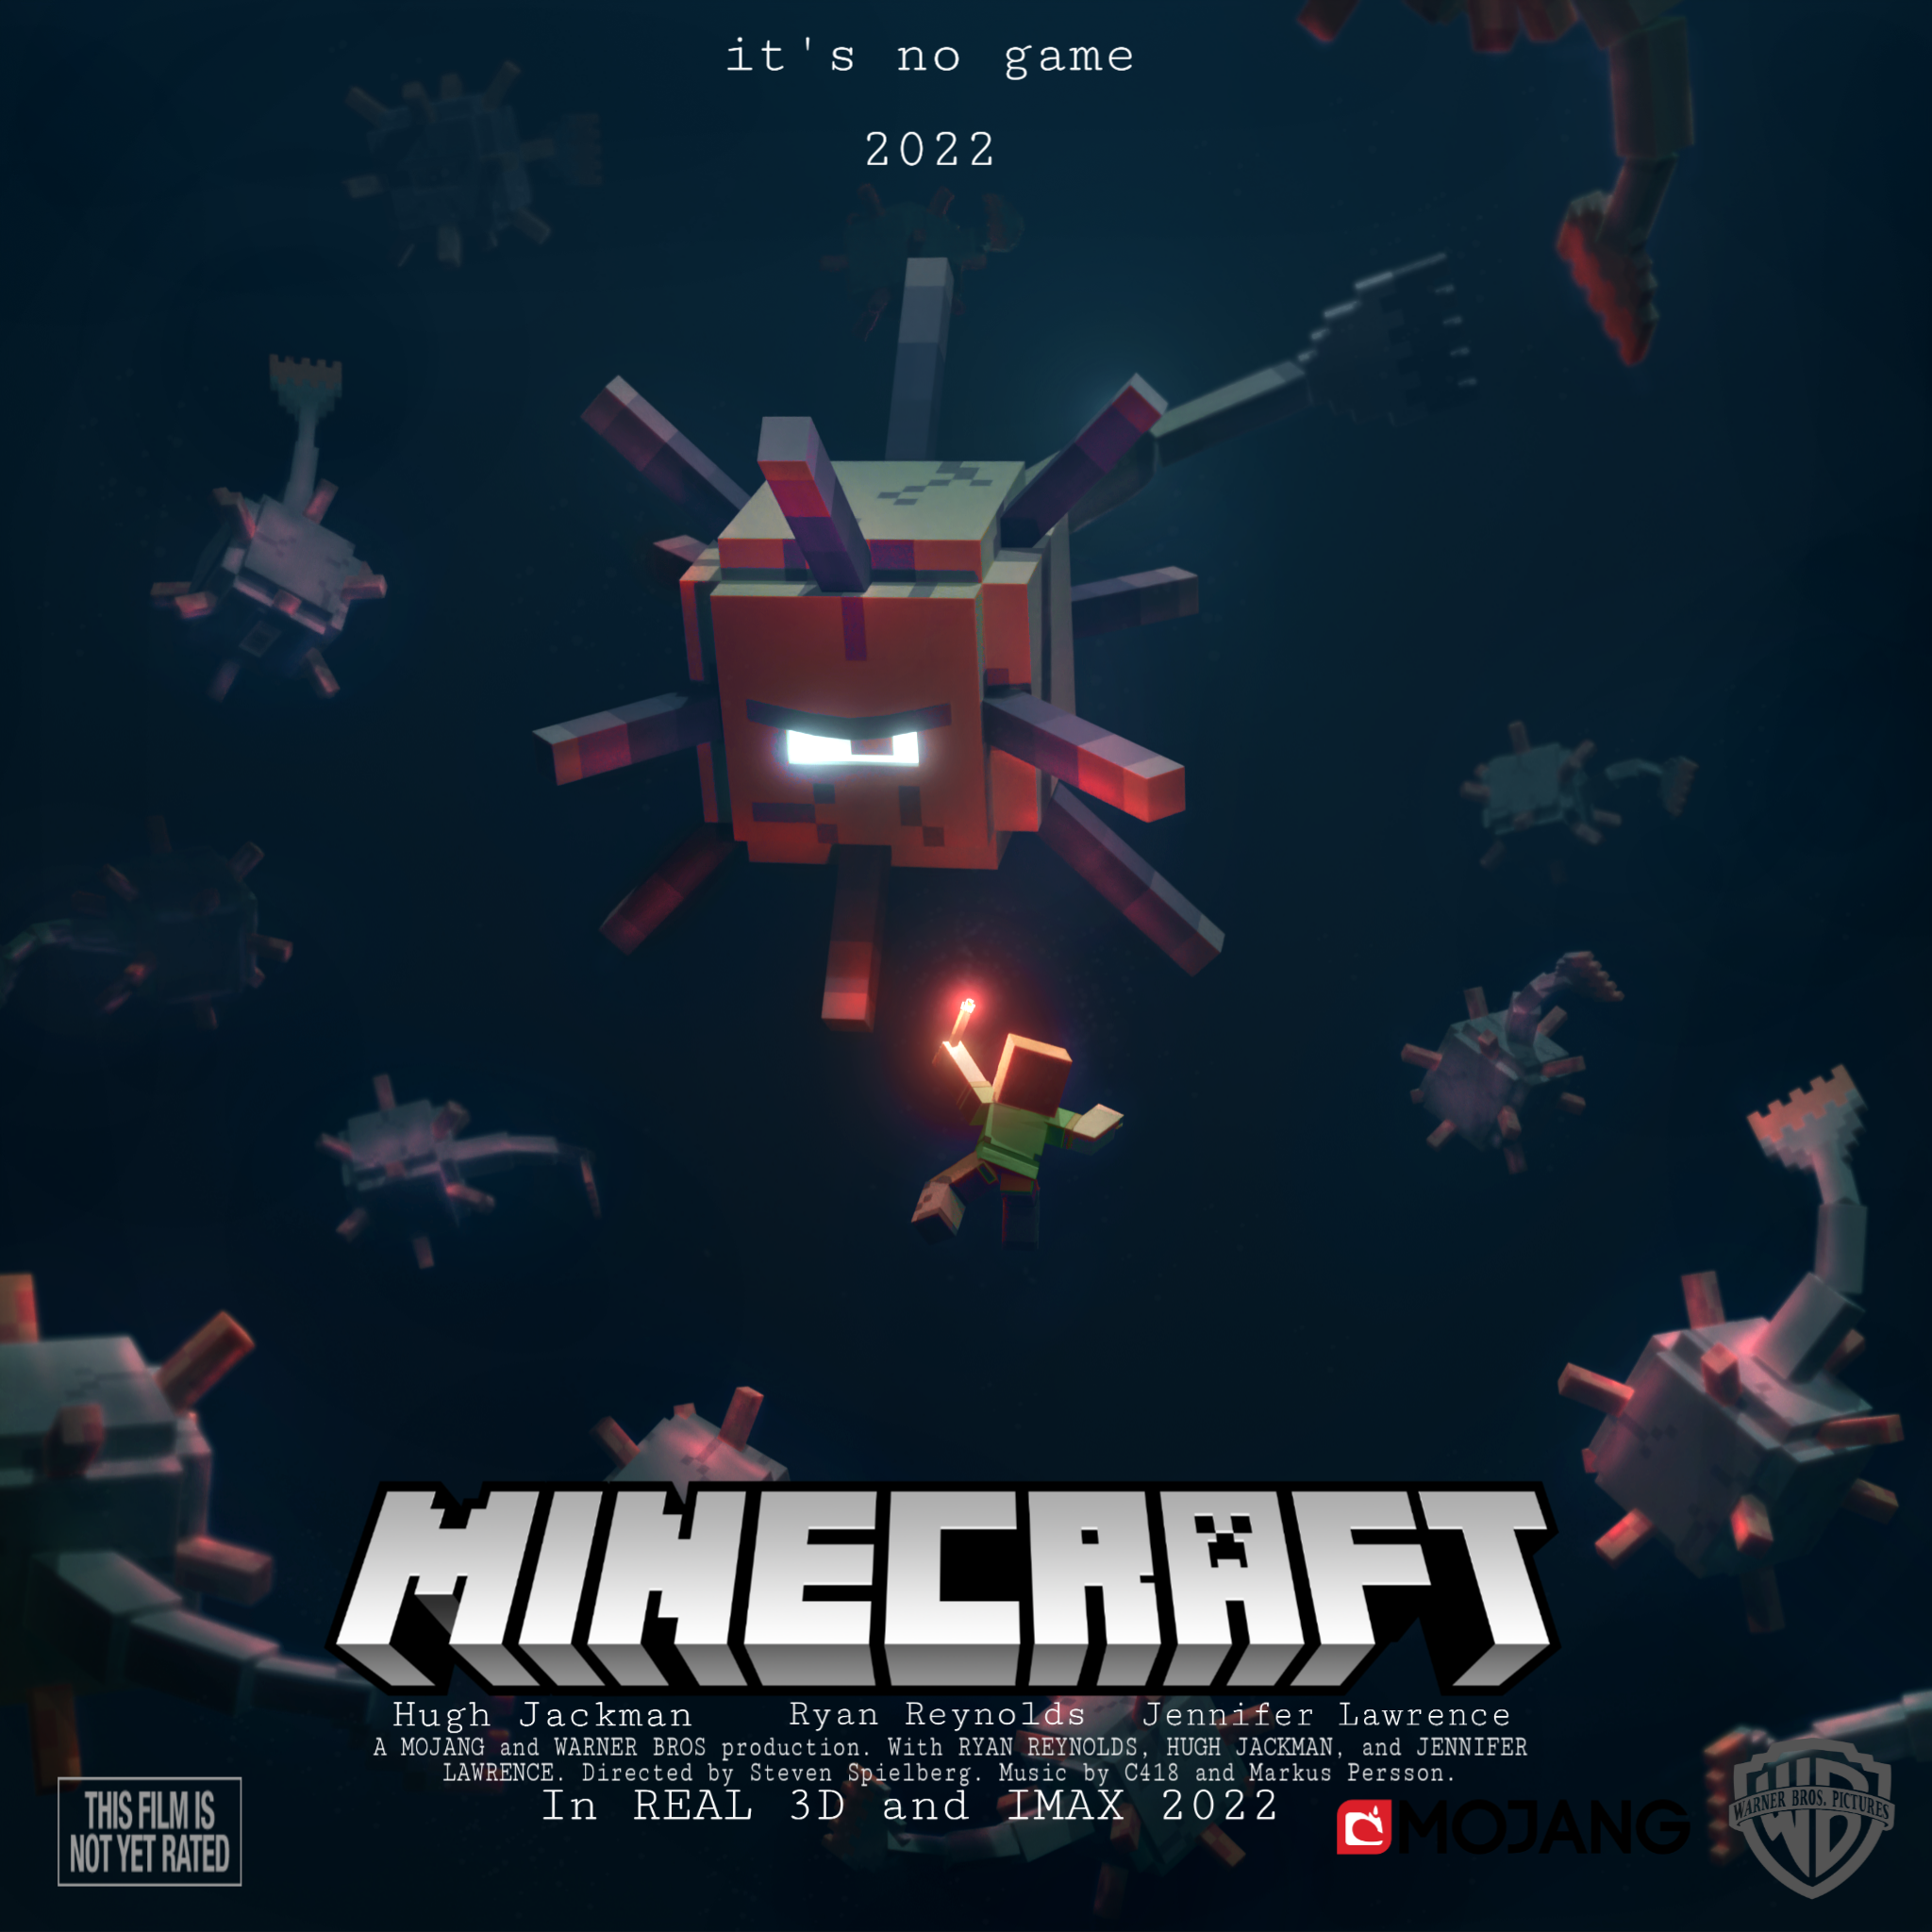 The Minecraft movie just enlisted a Wednesday star (Source: Deadline, , minecraft movie